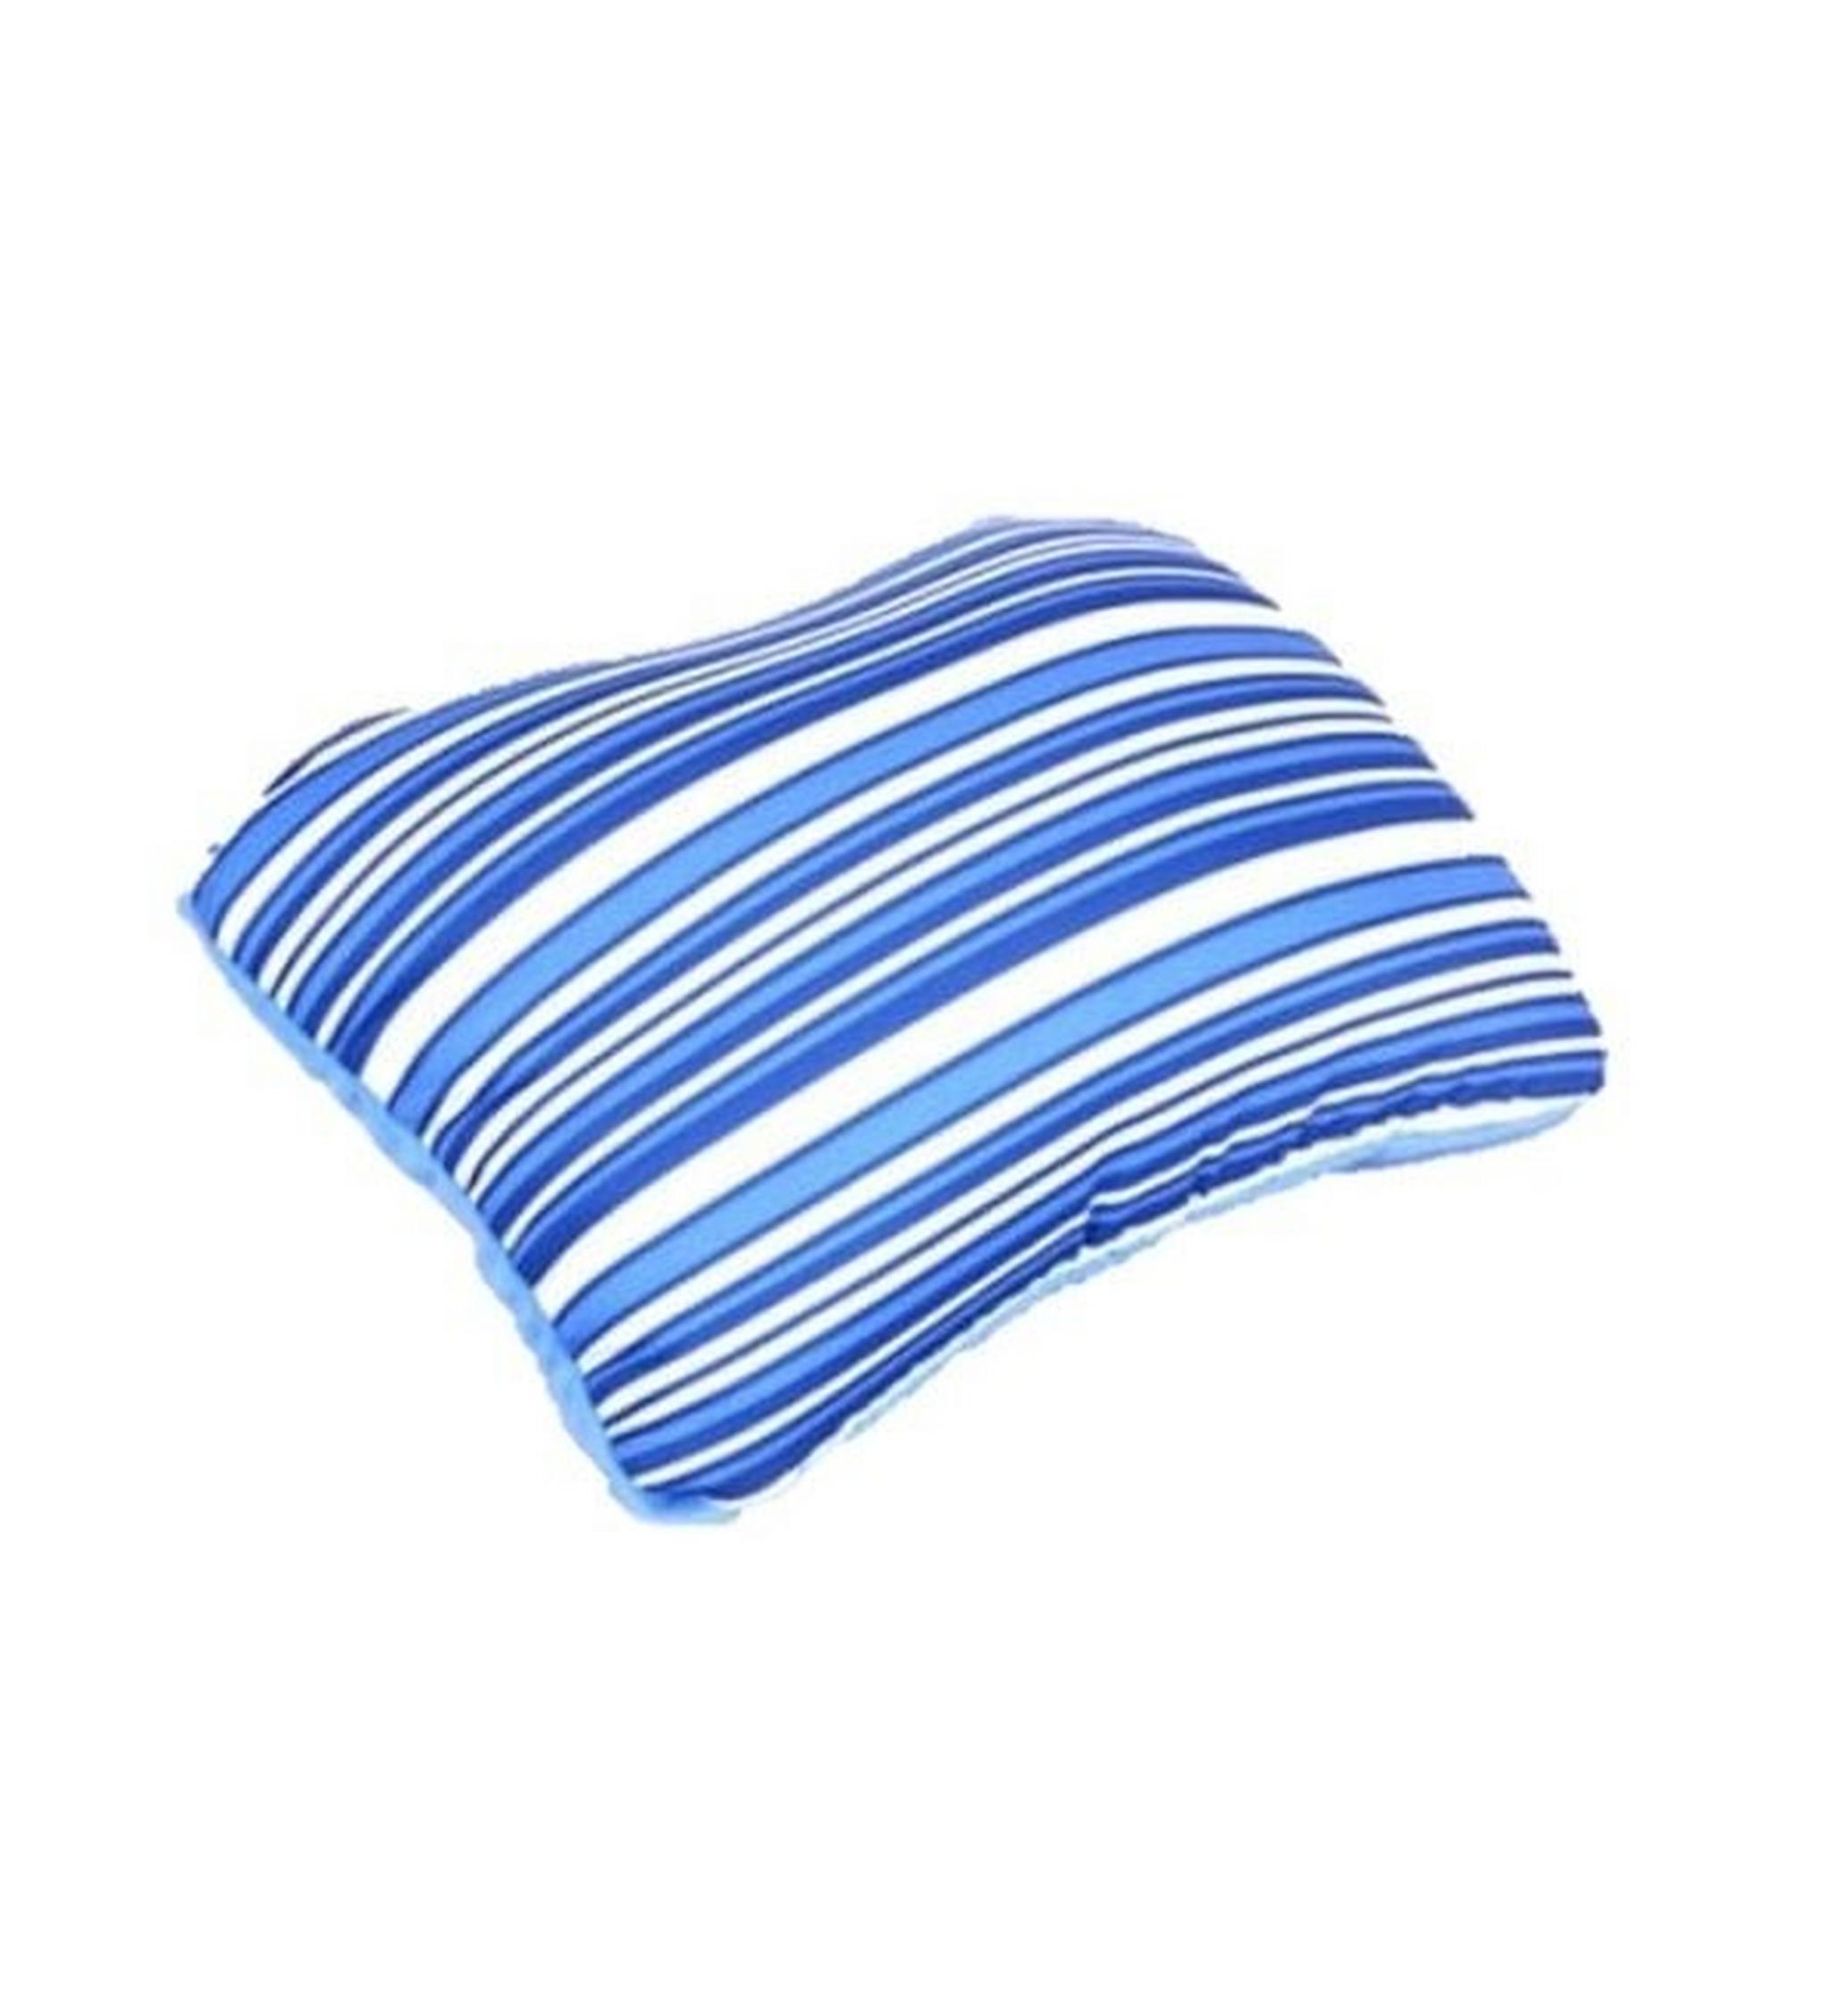 American Tourister 2-way Travel Pillows - Blue Stripes